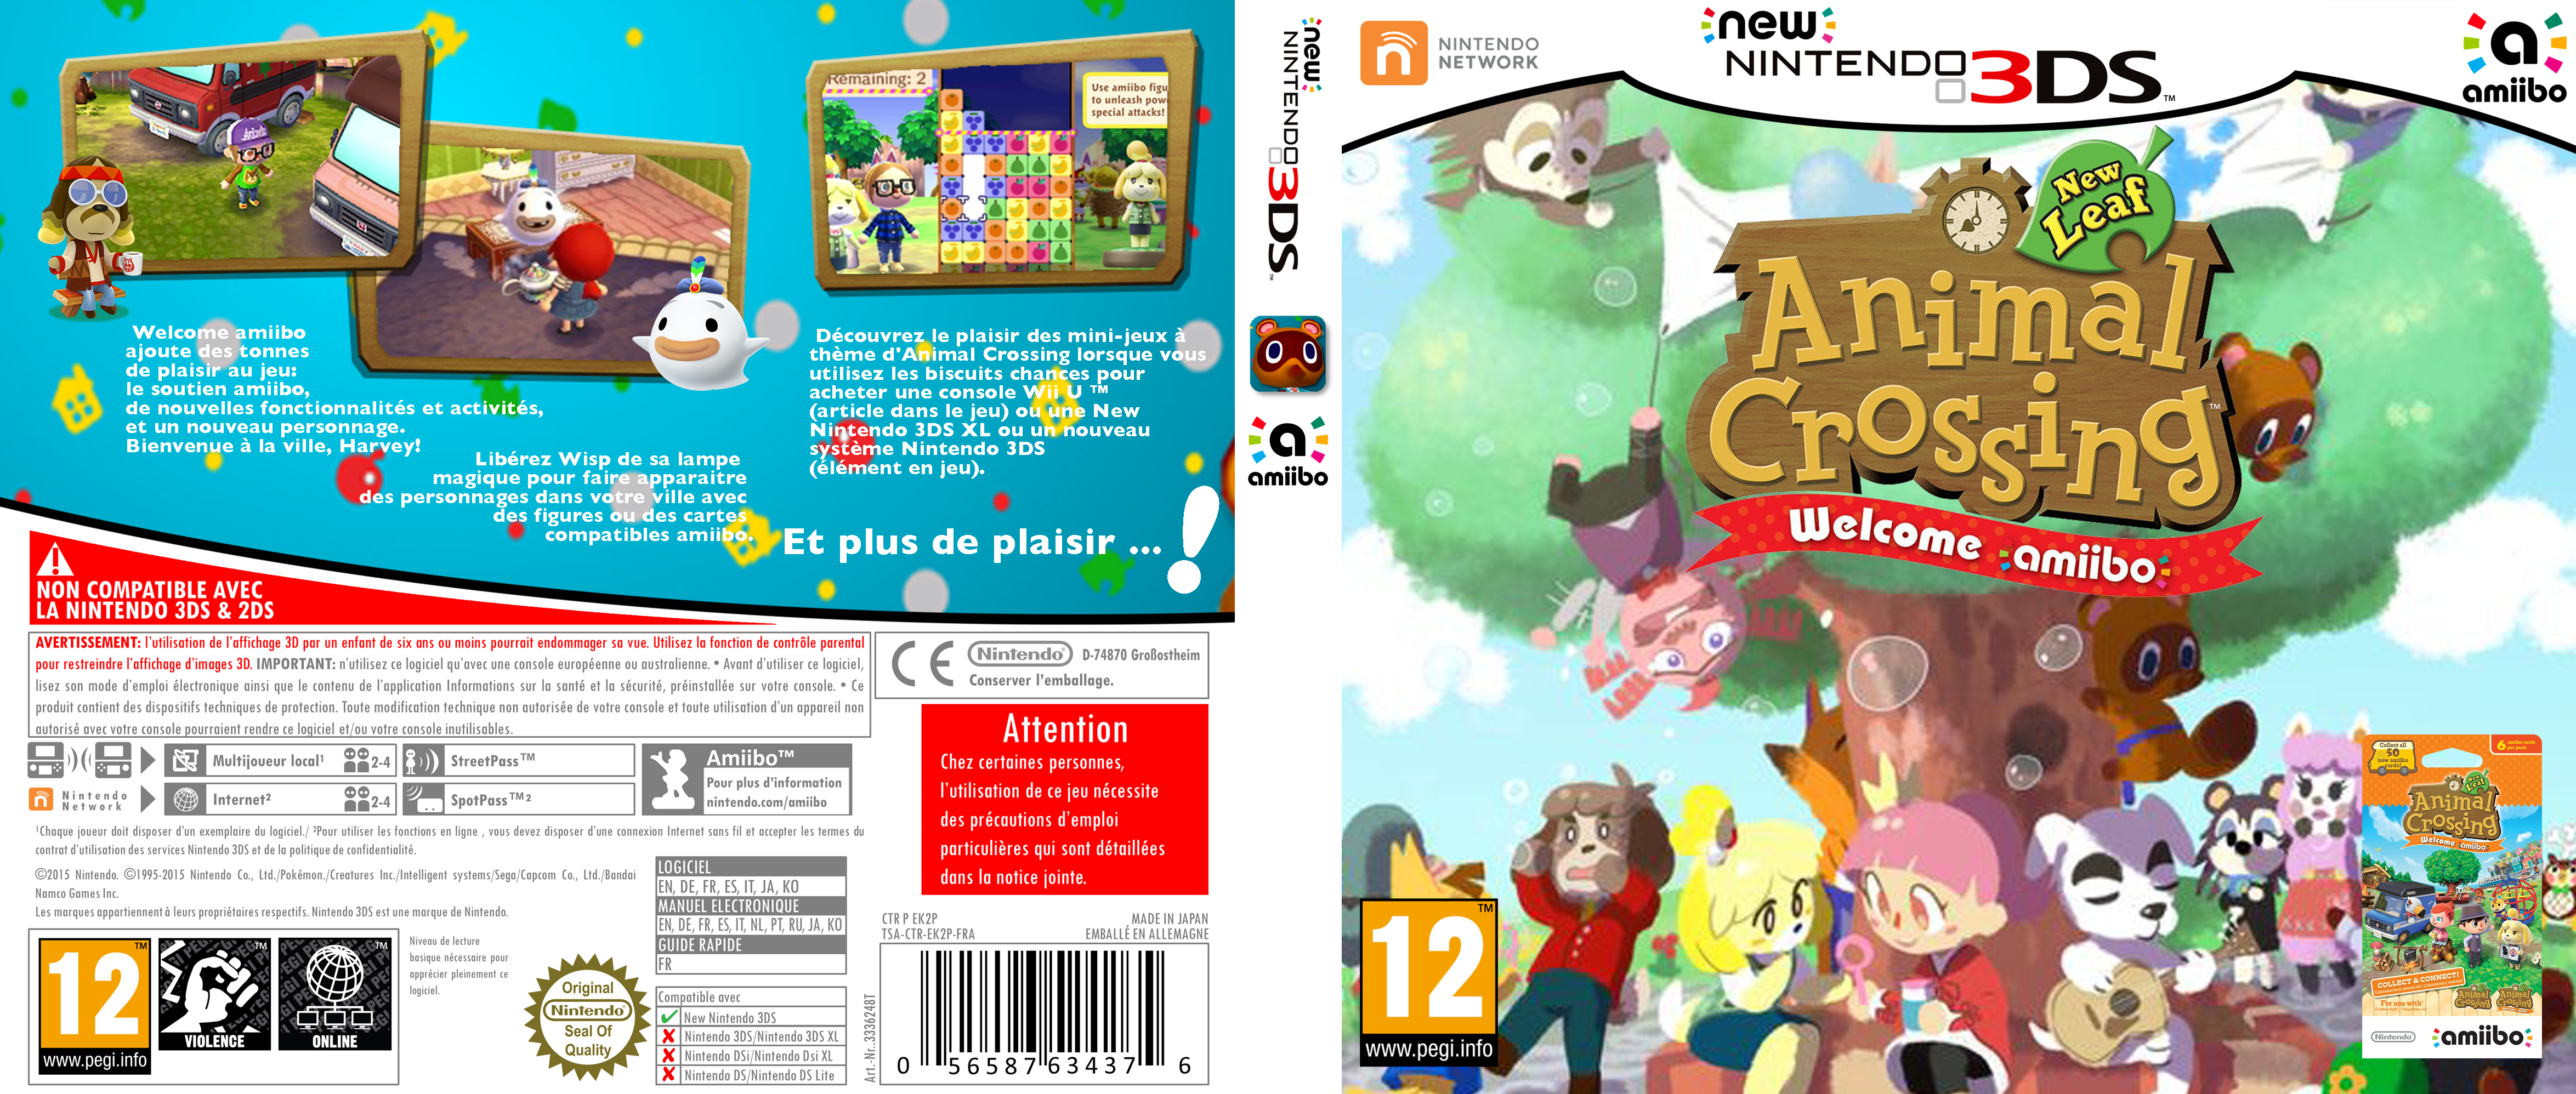 Animal Crossing : Welcome Amiibo box cover